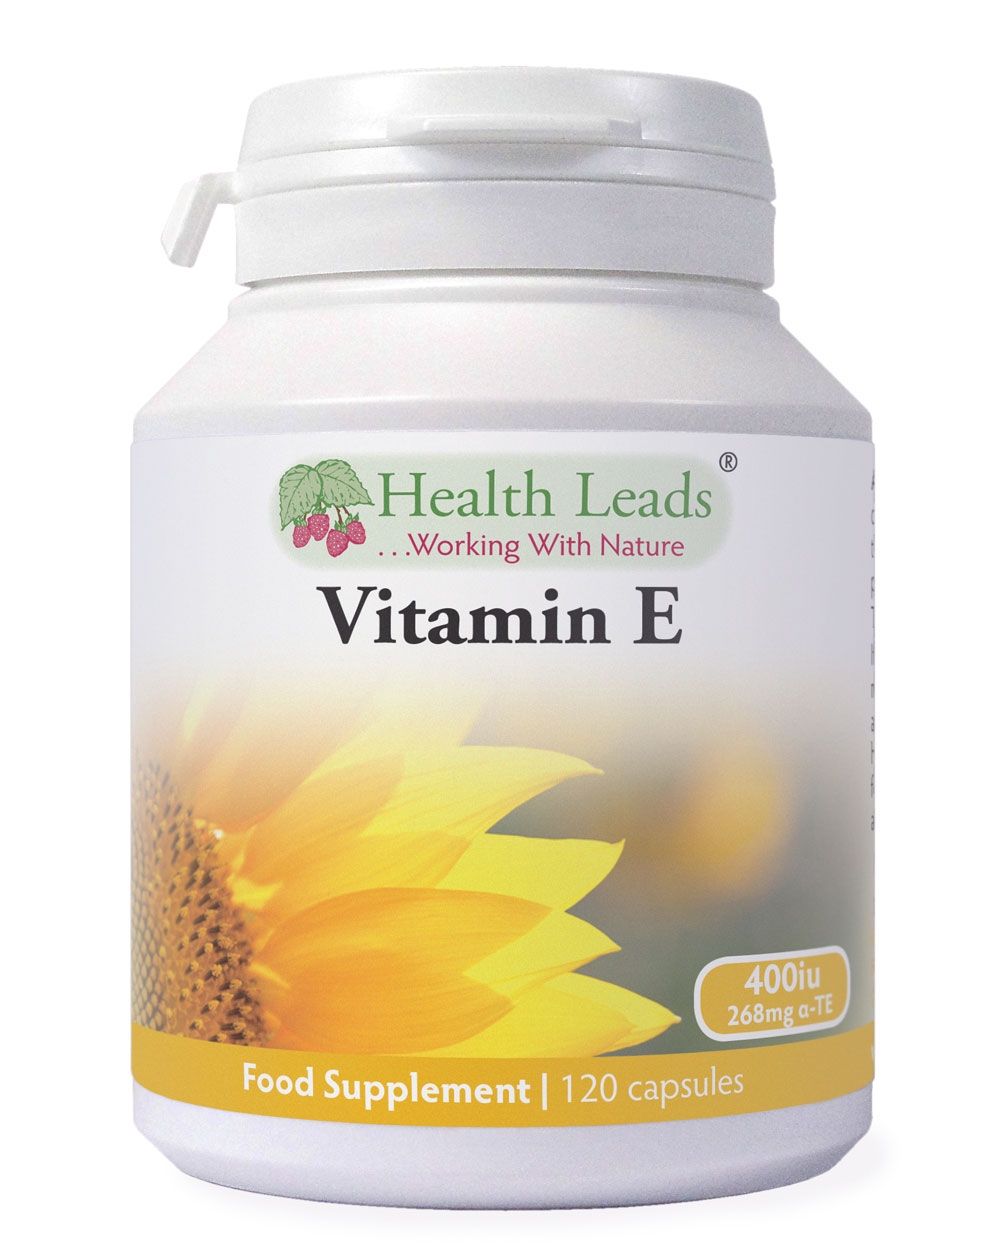 Vitamin E 400iu - 120 capsules